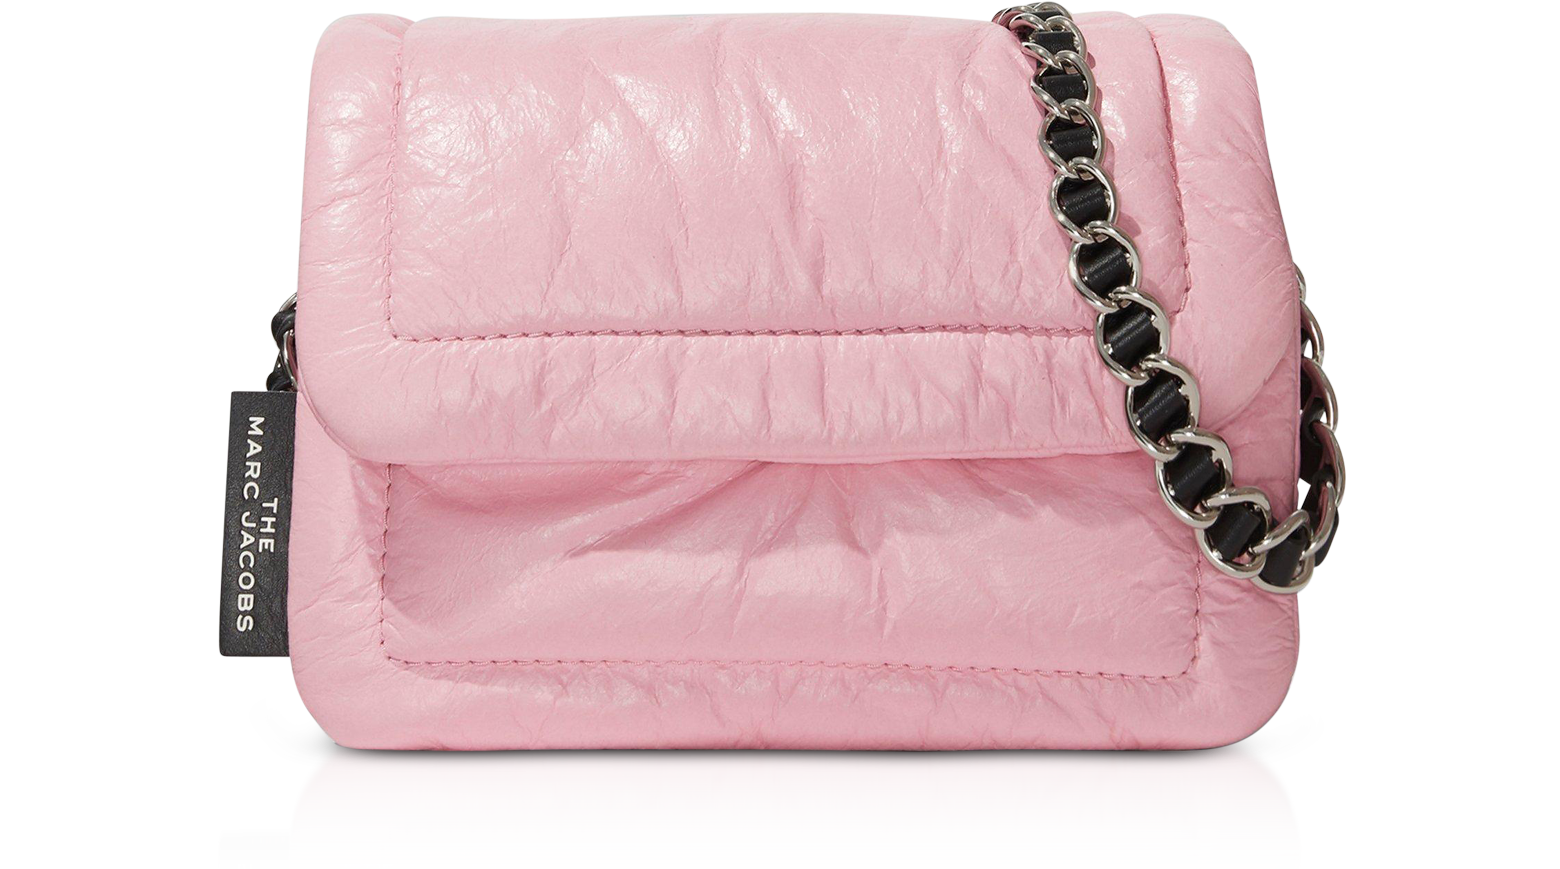 Marc Jacobs Mini Pillow Bag